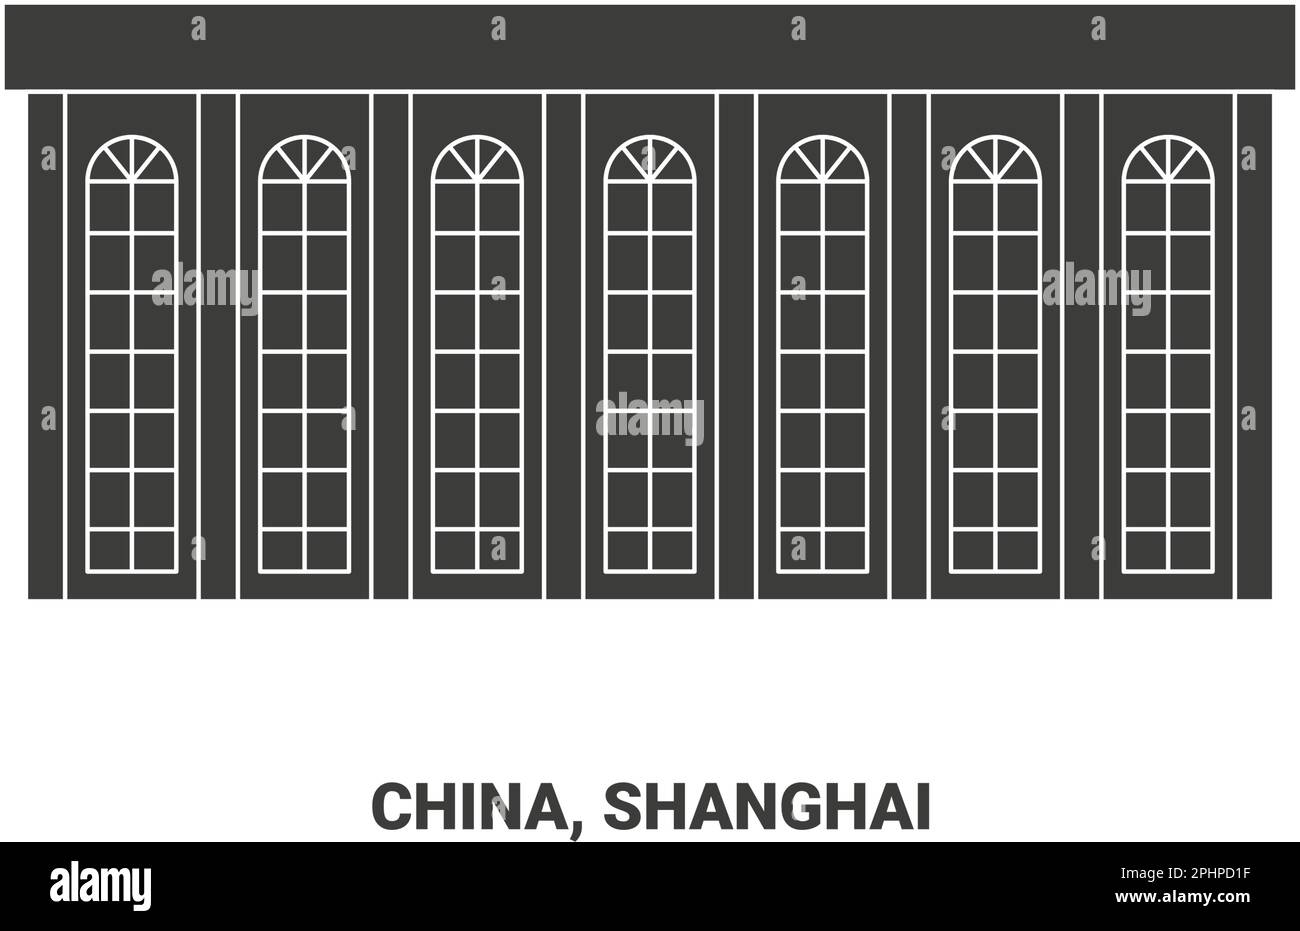 China, Shanghai travel landmark vector illustration Stock Vector